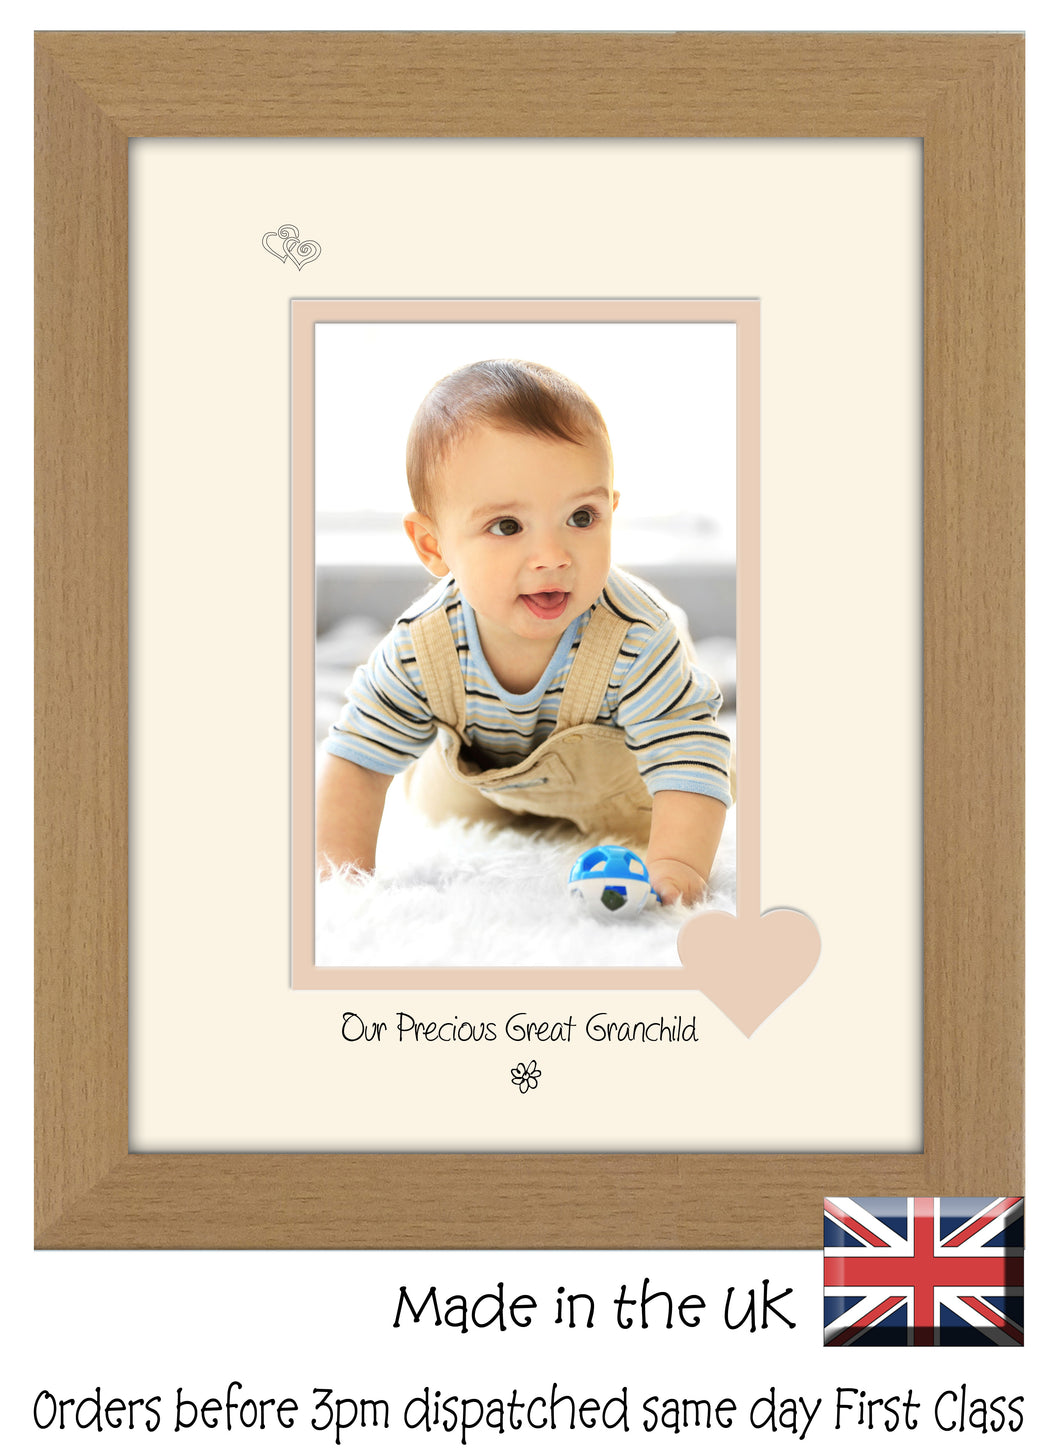 Great Grandchild Photo Frame - Our precious Great Grandchild Portrait photo frame 6